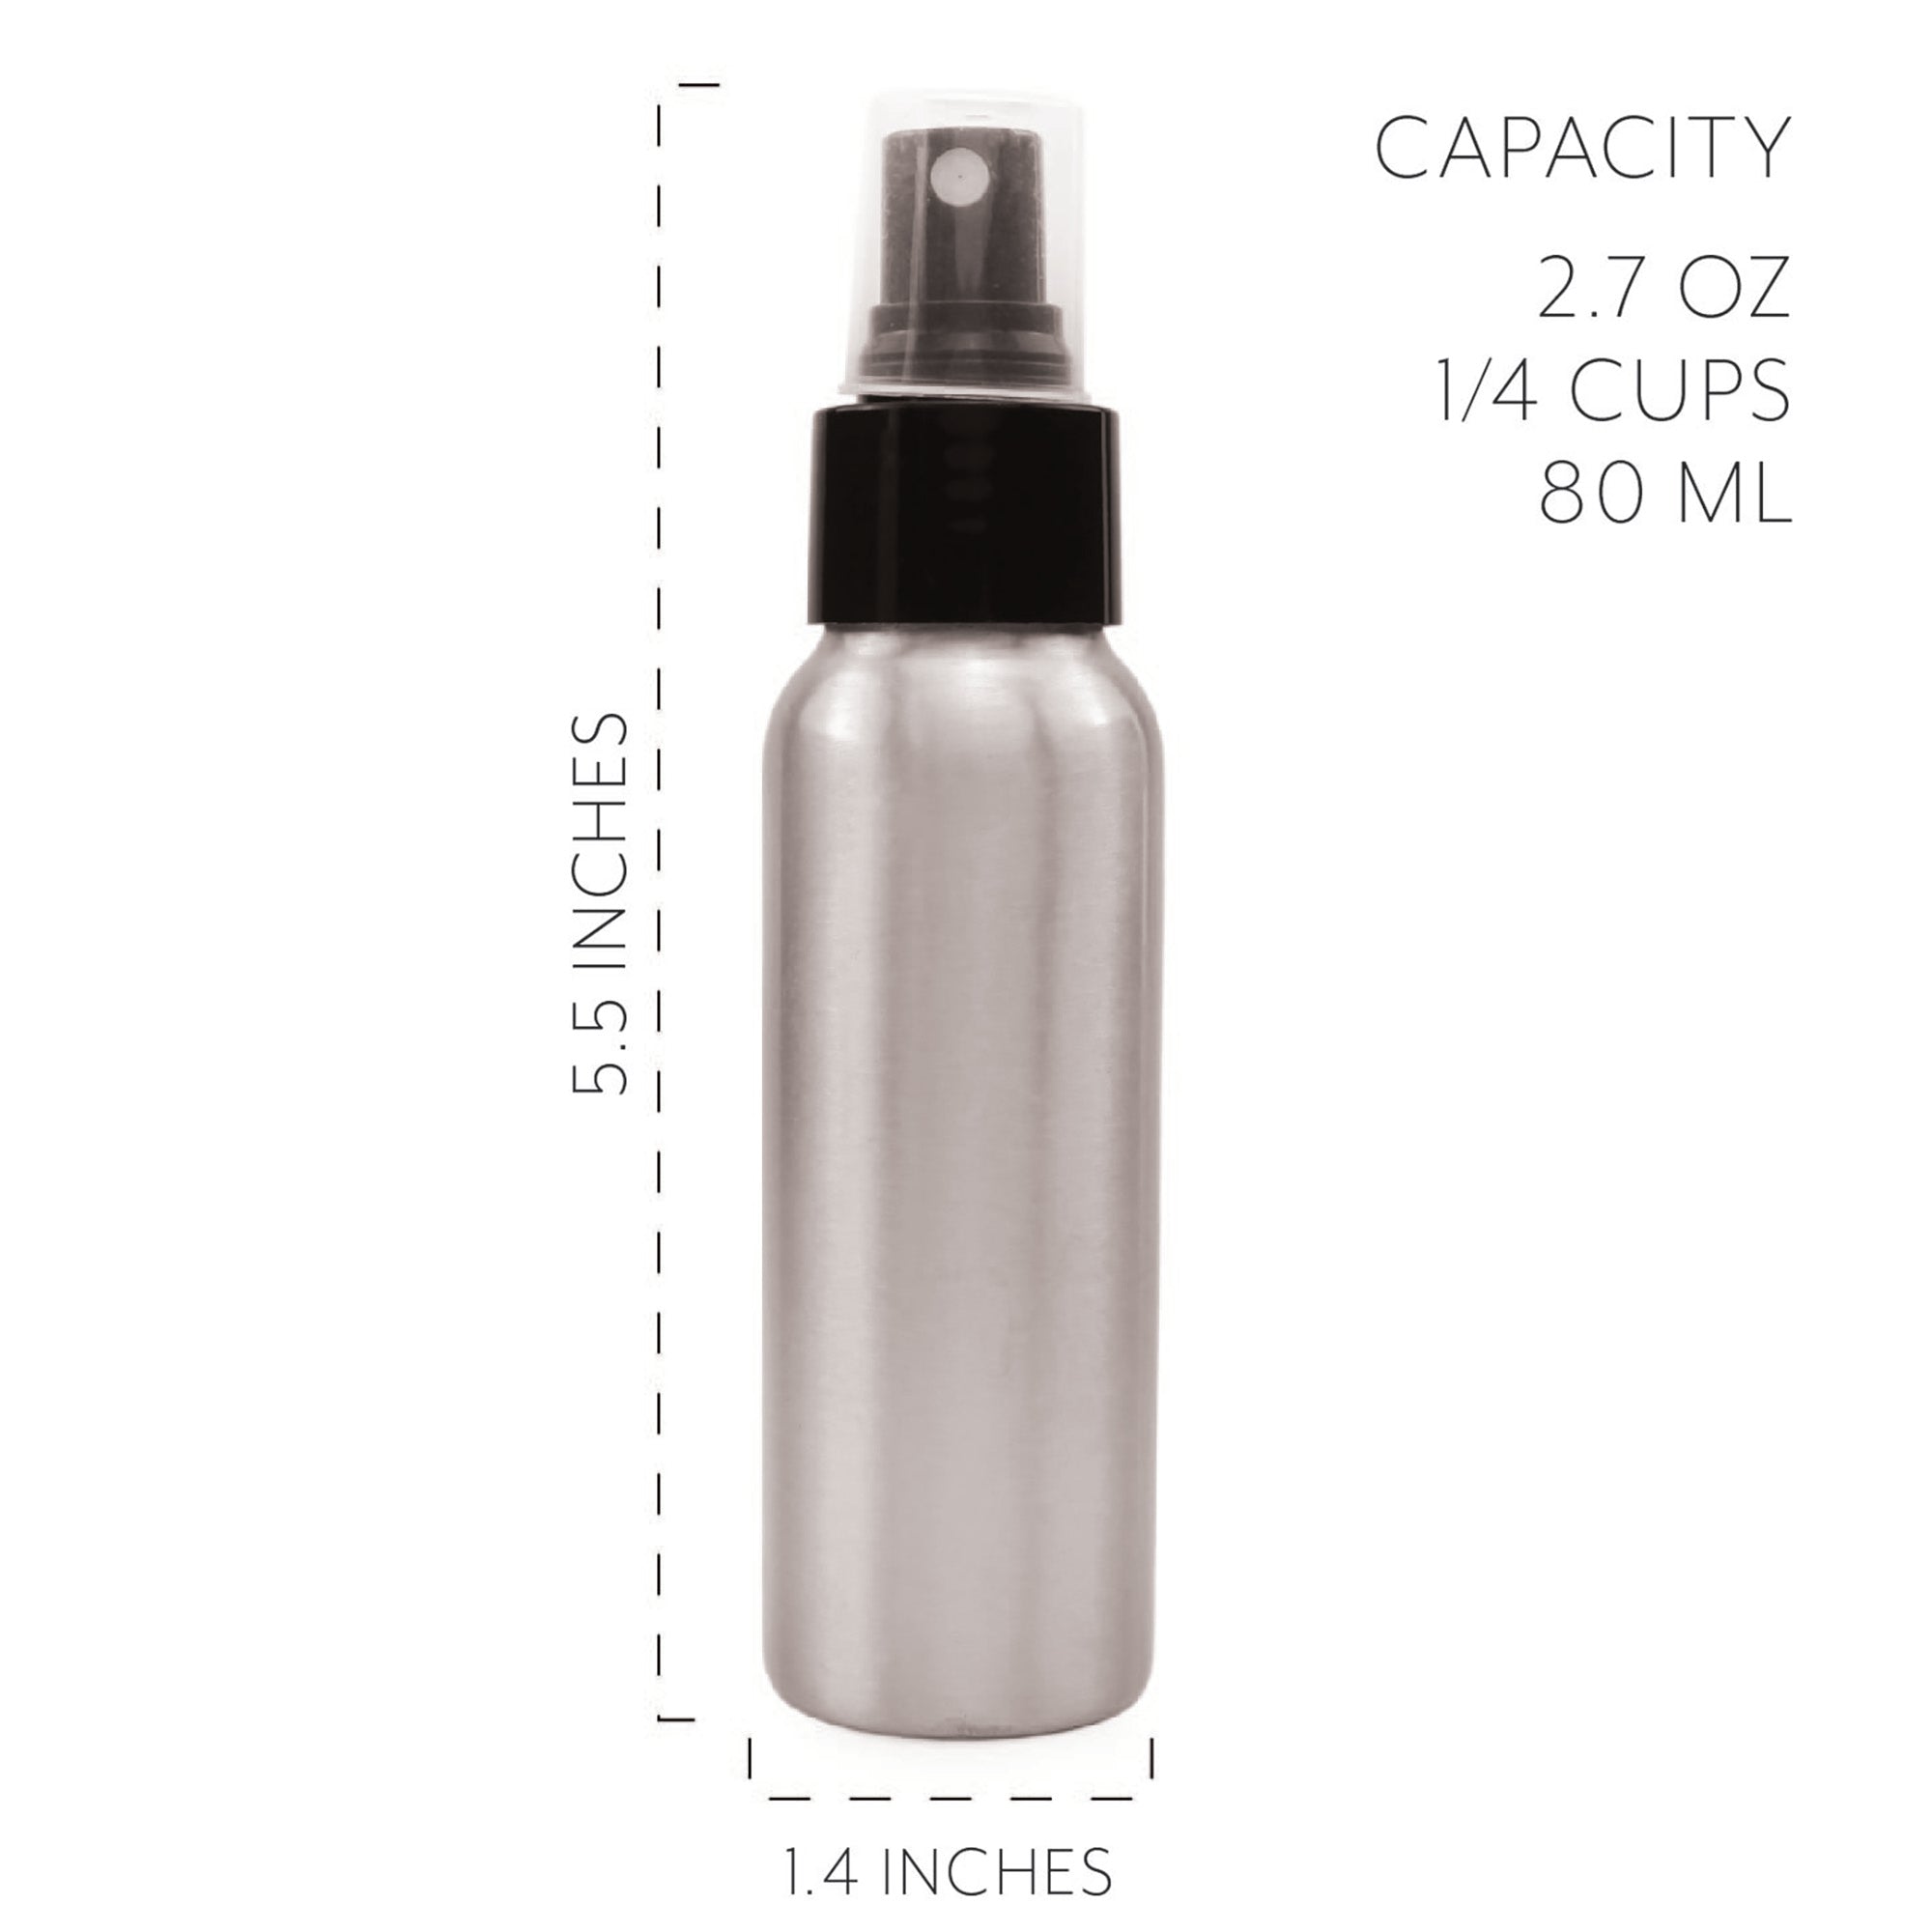 Cornucopia Brands- 8oz Amber Glass Spray Bottles With Black Heavy